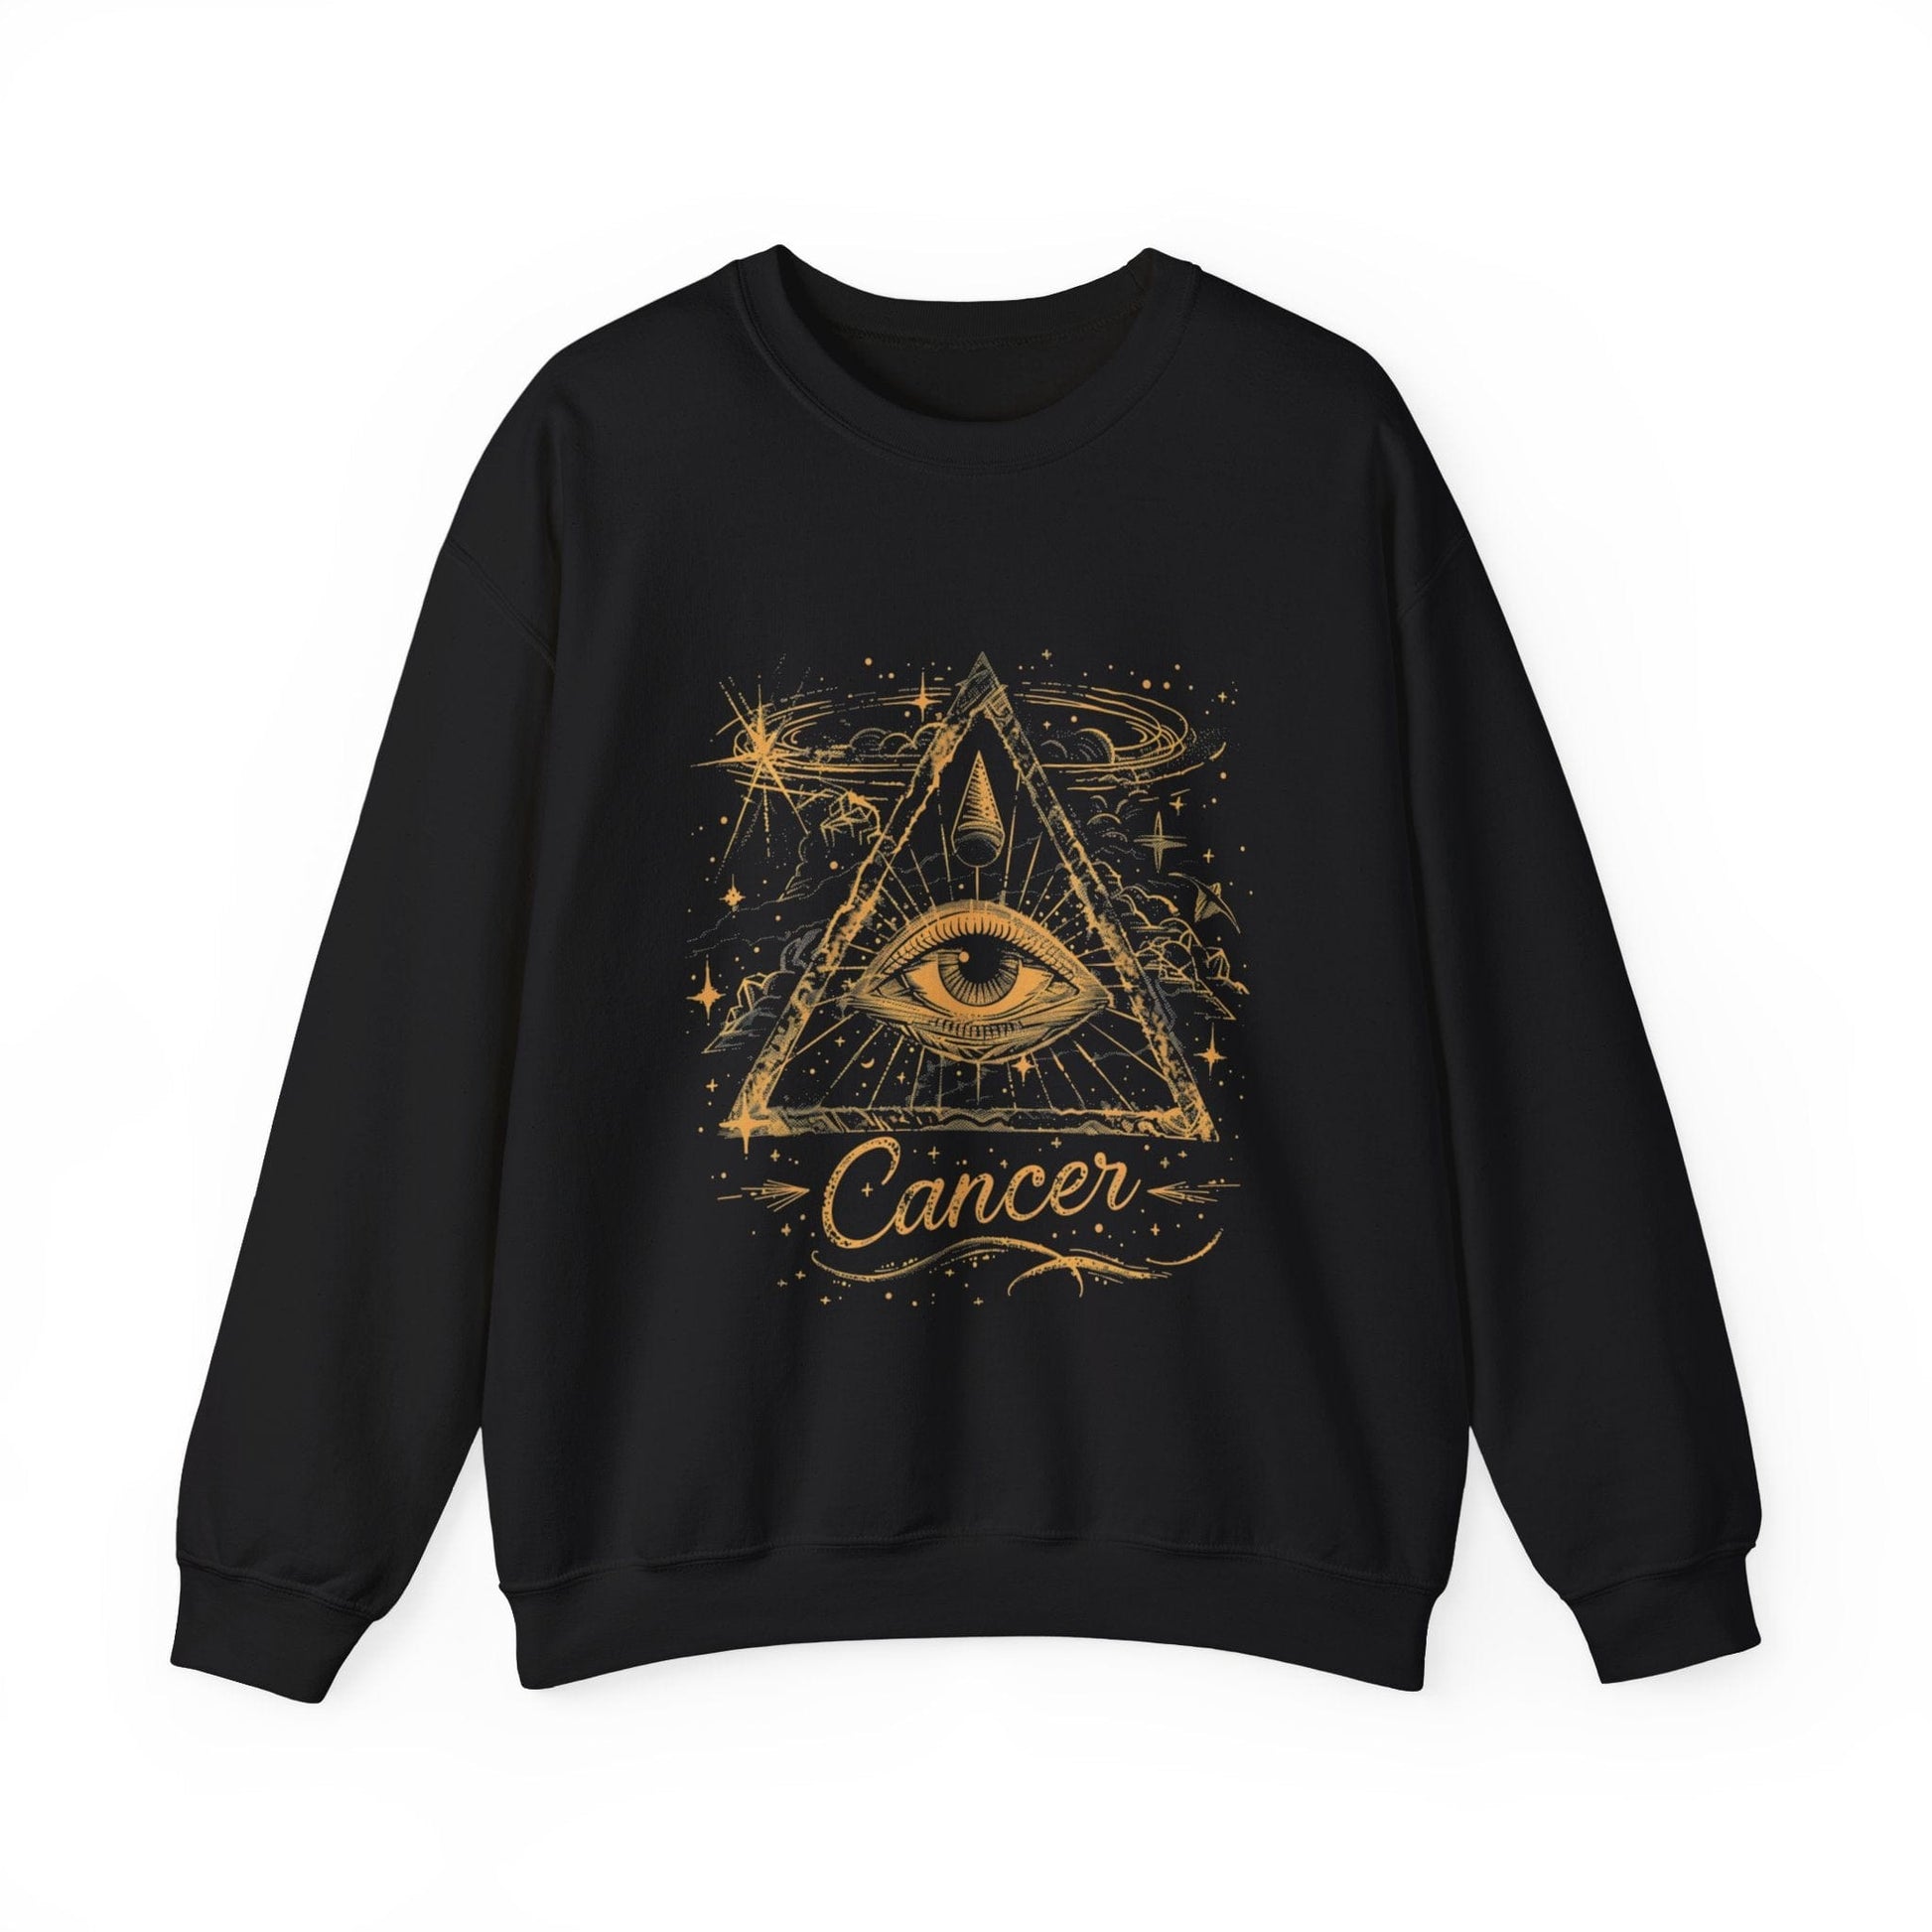 Sweatshirt S / Black Cancer Mystical Allure Crewneck Sweatshirt: Cosmic Comfort Meets Esoteric Style